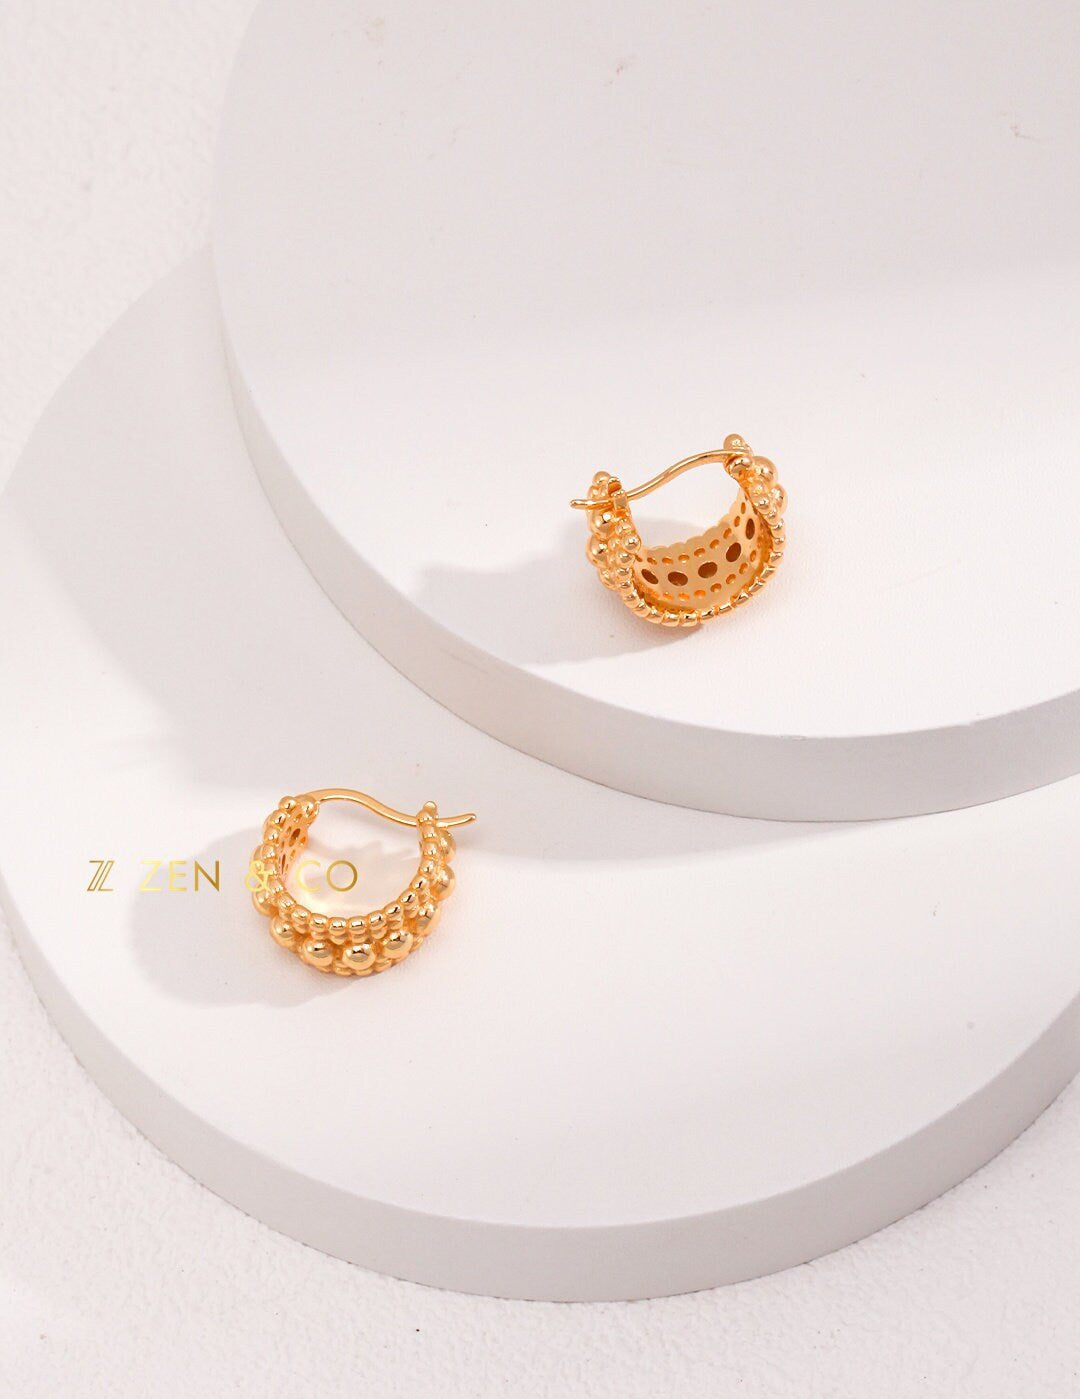 CAMILLE French empress style hoop earrings chunk ring - ZEN&CO Studio